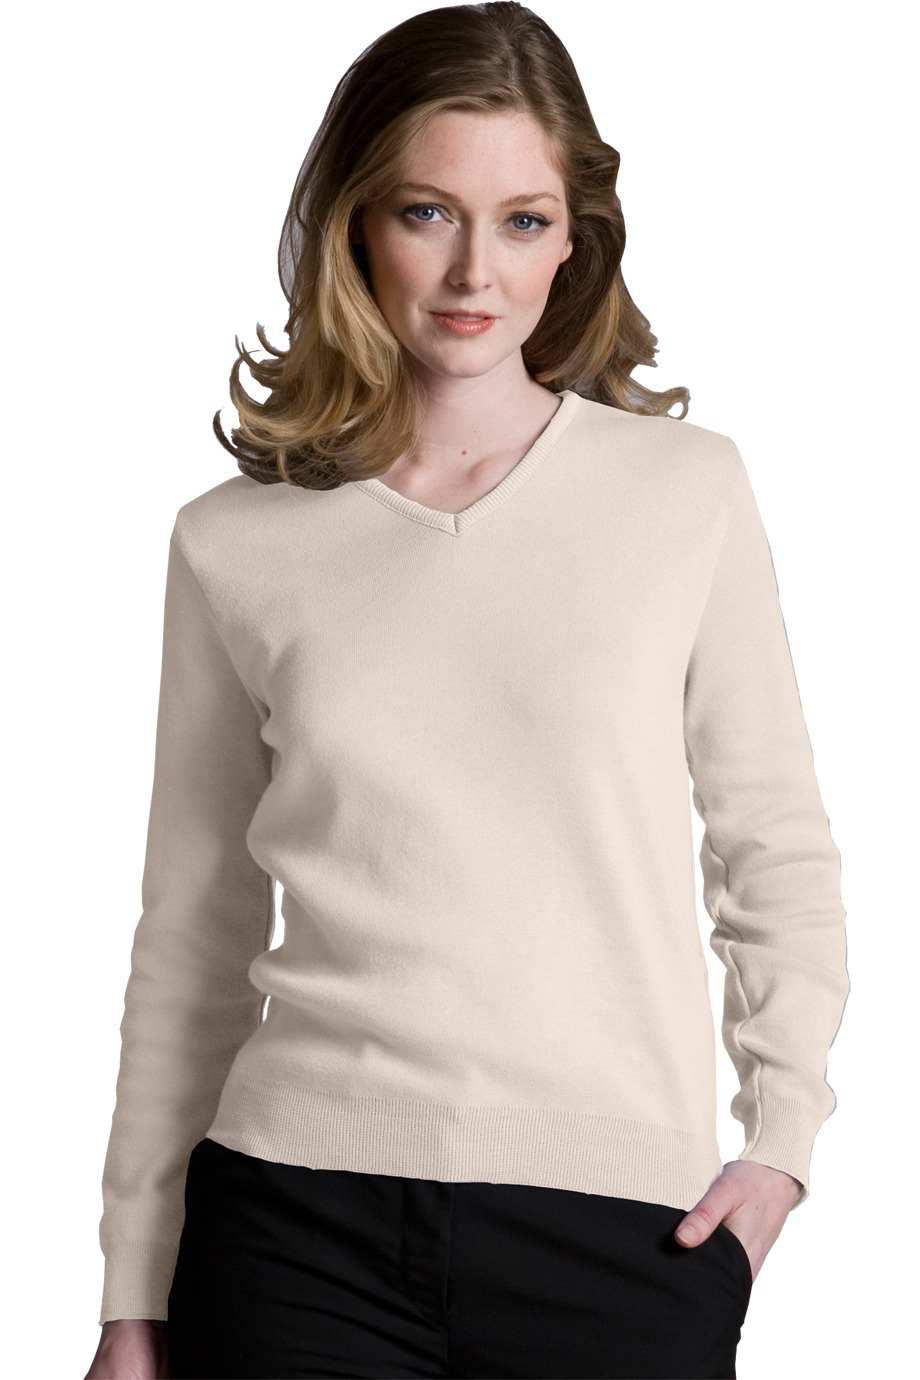 Edwards Garment 090 - Women's Cotton Cashmere V-Neck Sweater